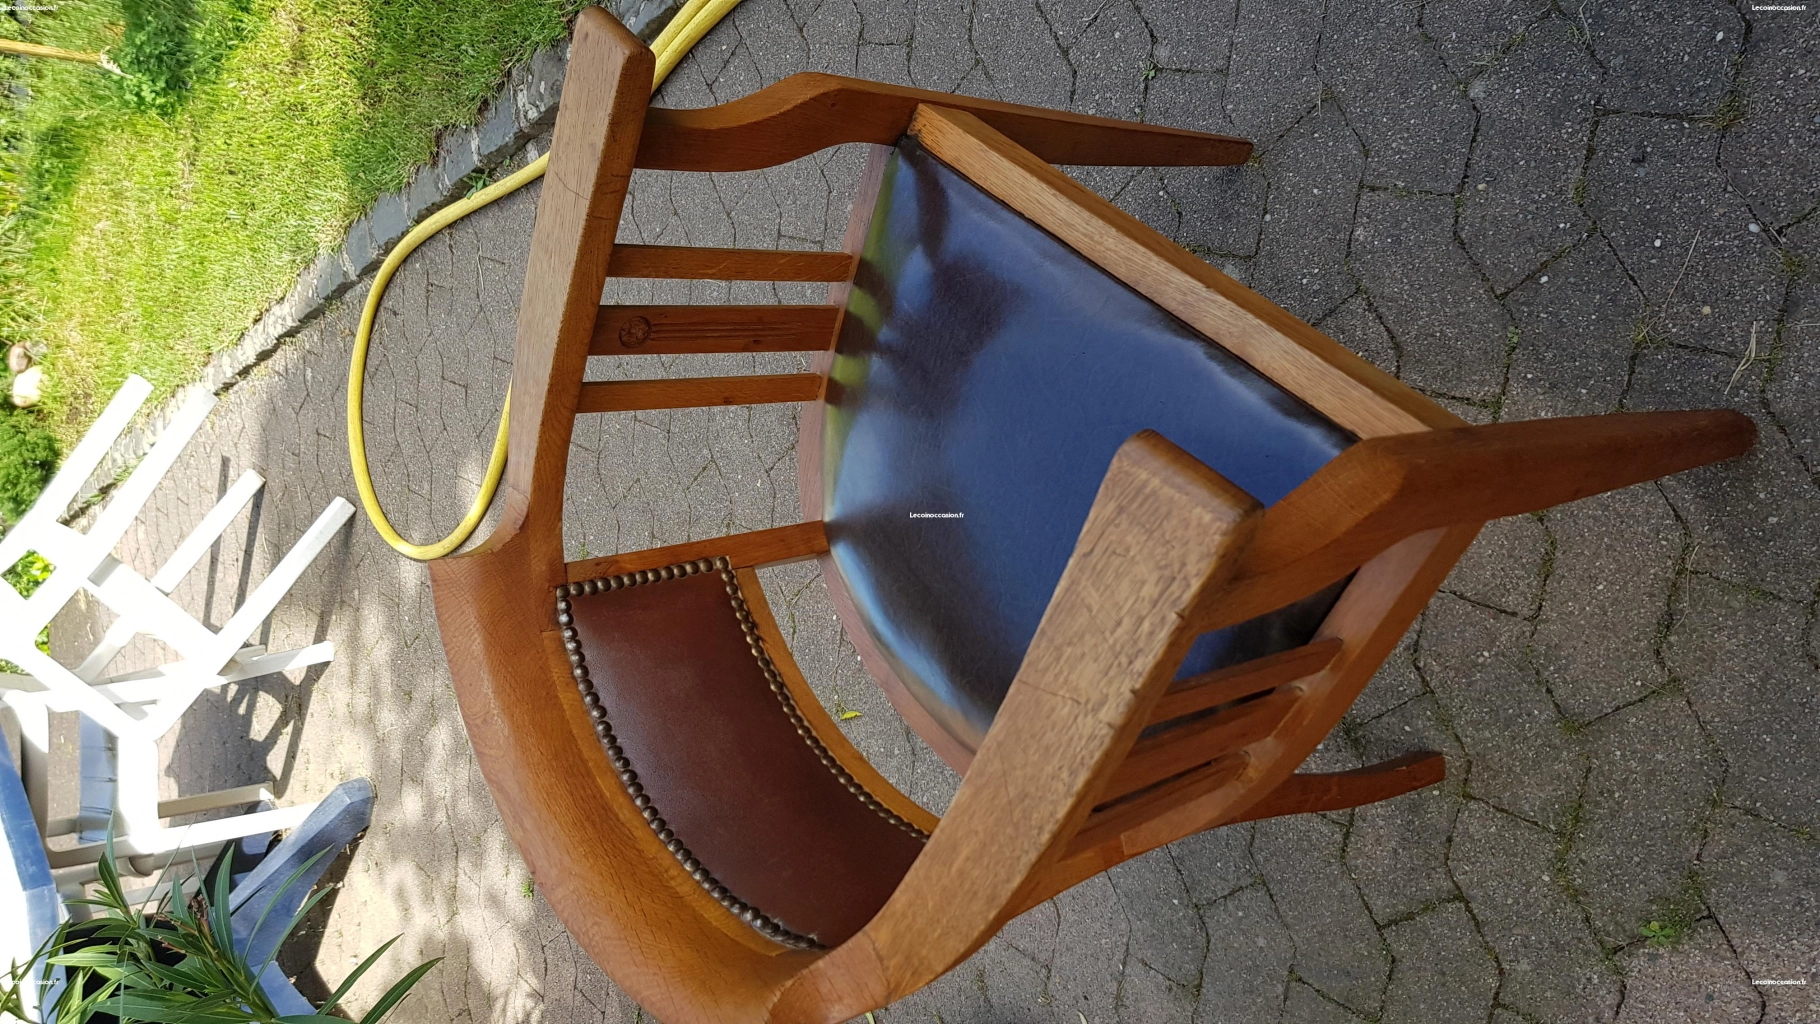 Chaise en bois ancienne